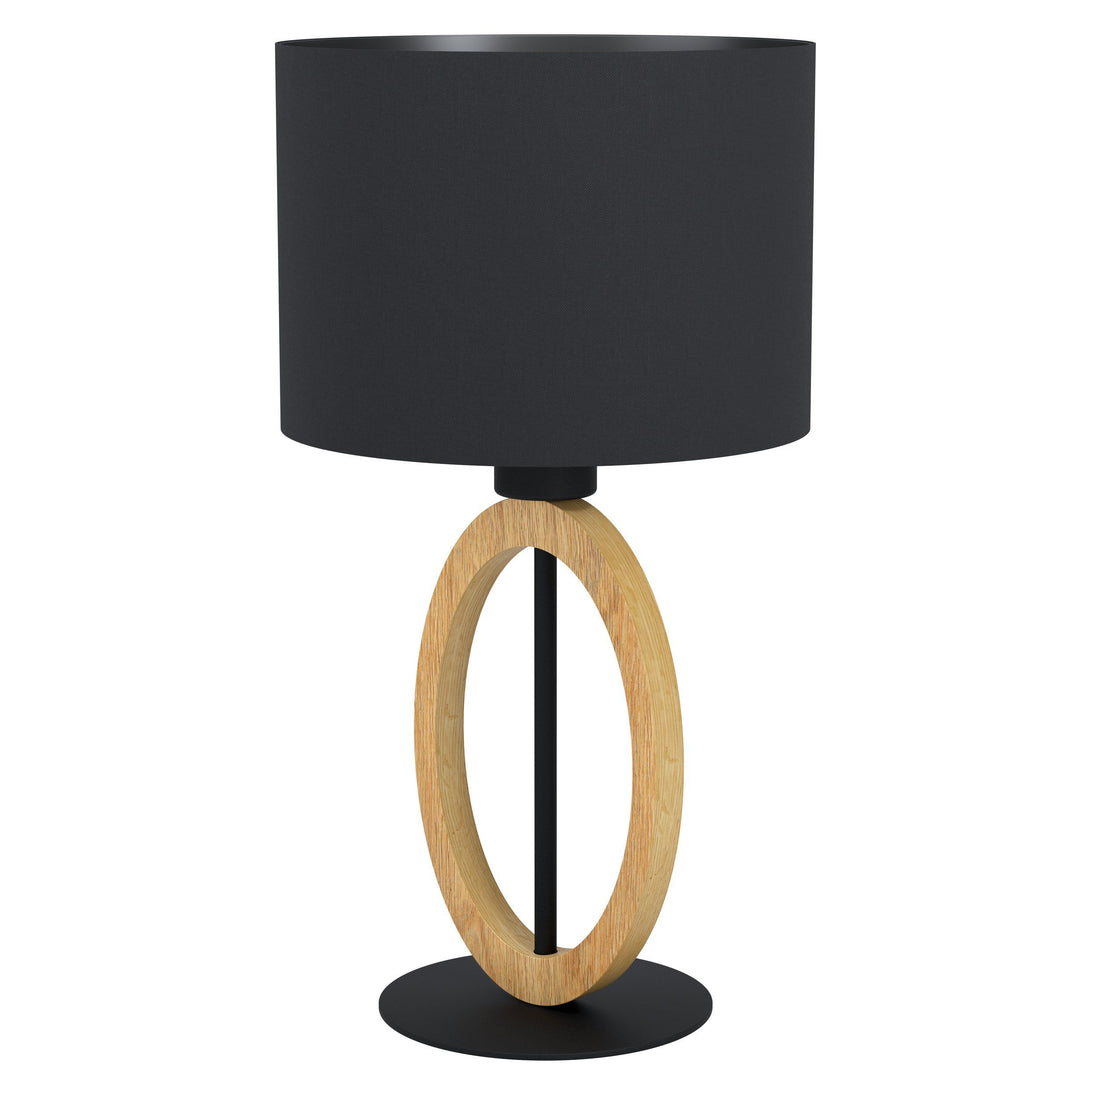 Basildon Black and Timber Table Lamp